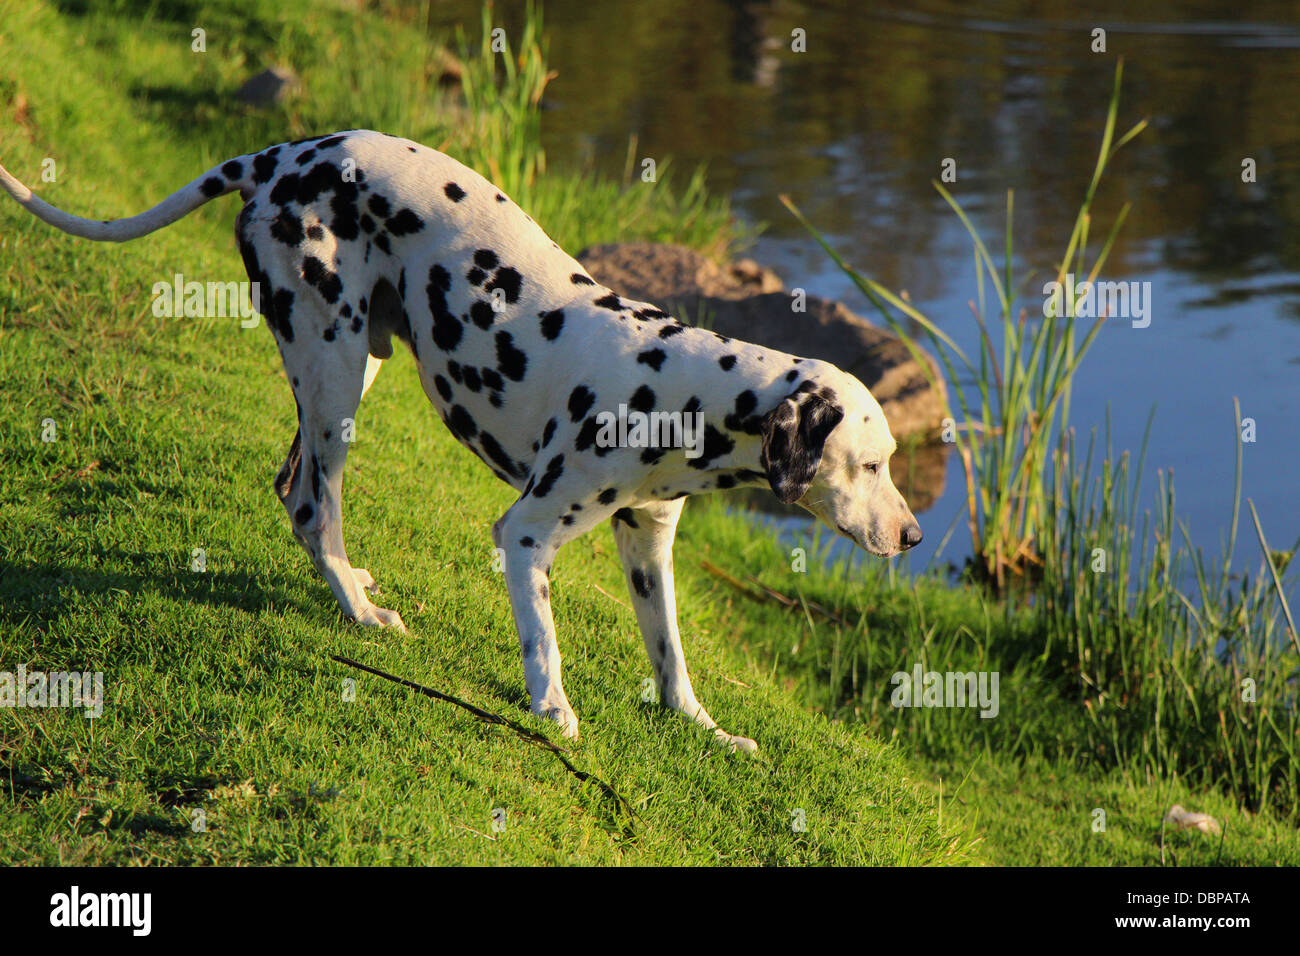 Curious Dalmatian explores the waters edge at a park dam Stock Photo